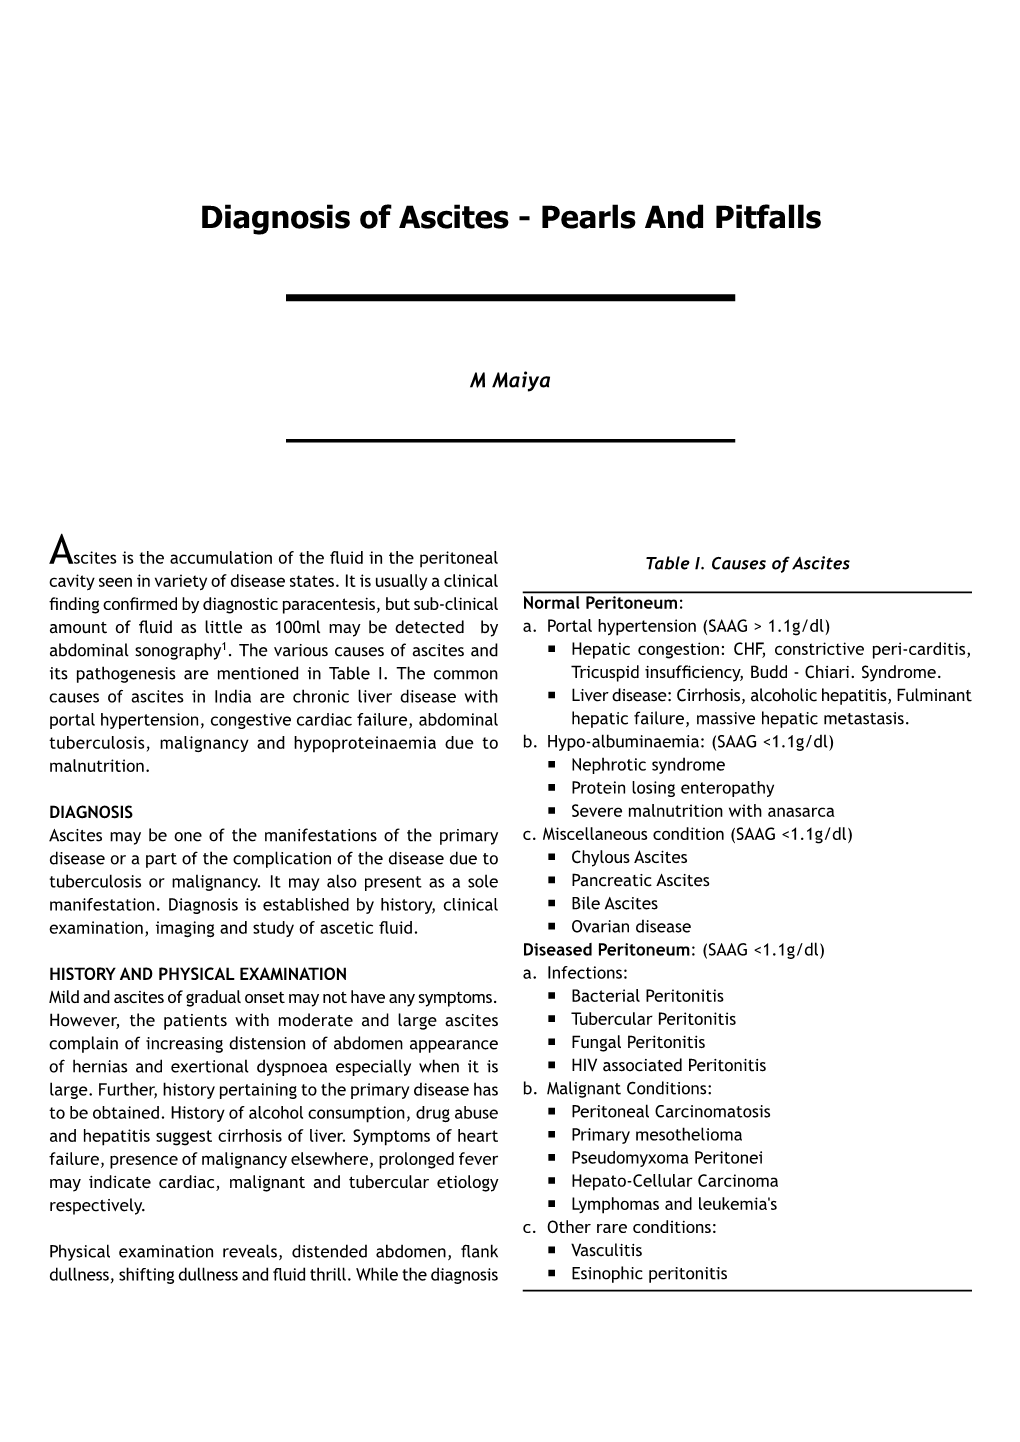 Diagnosis of Ascites - Pearls and Pitfalls